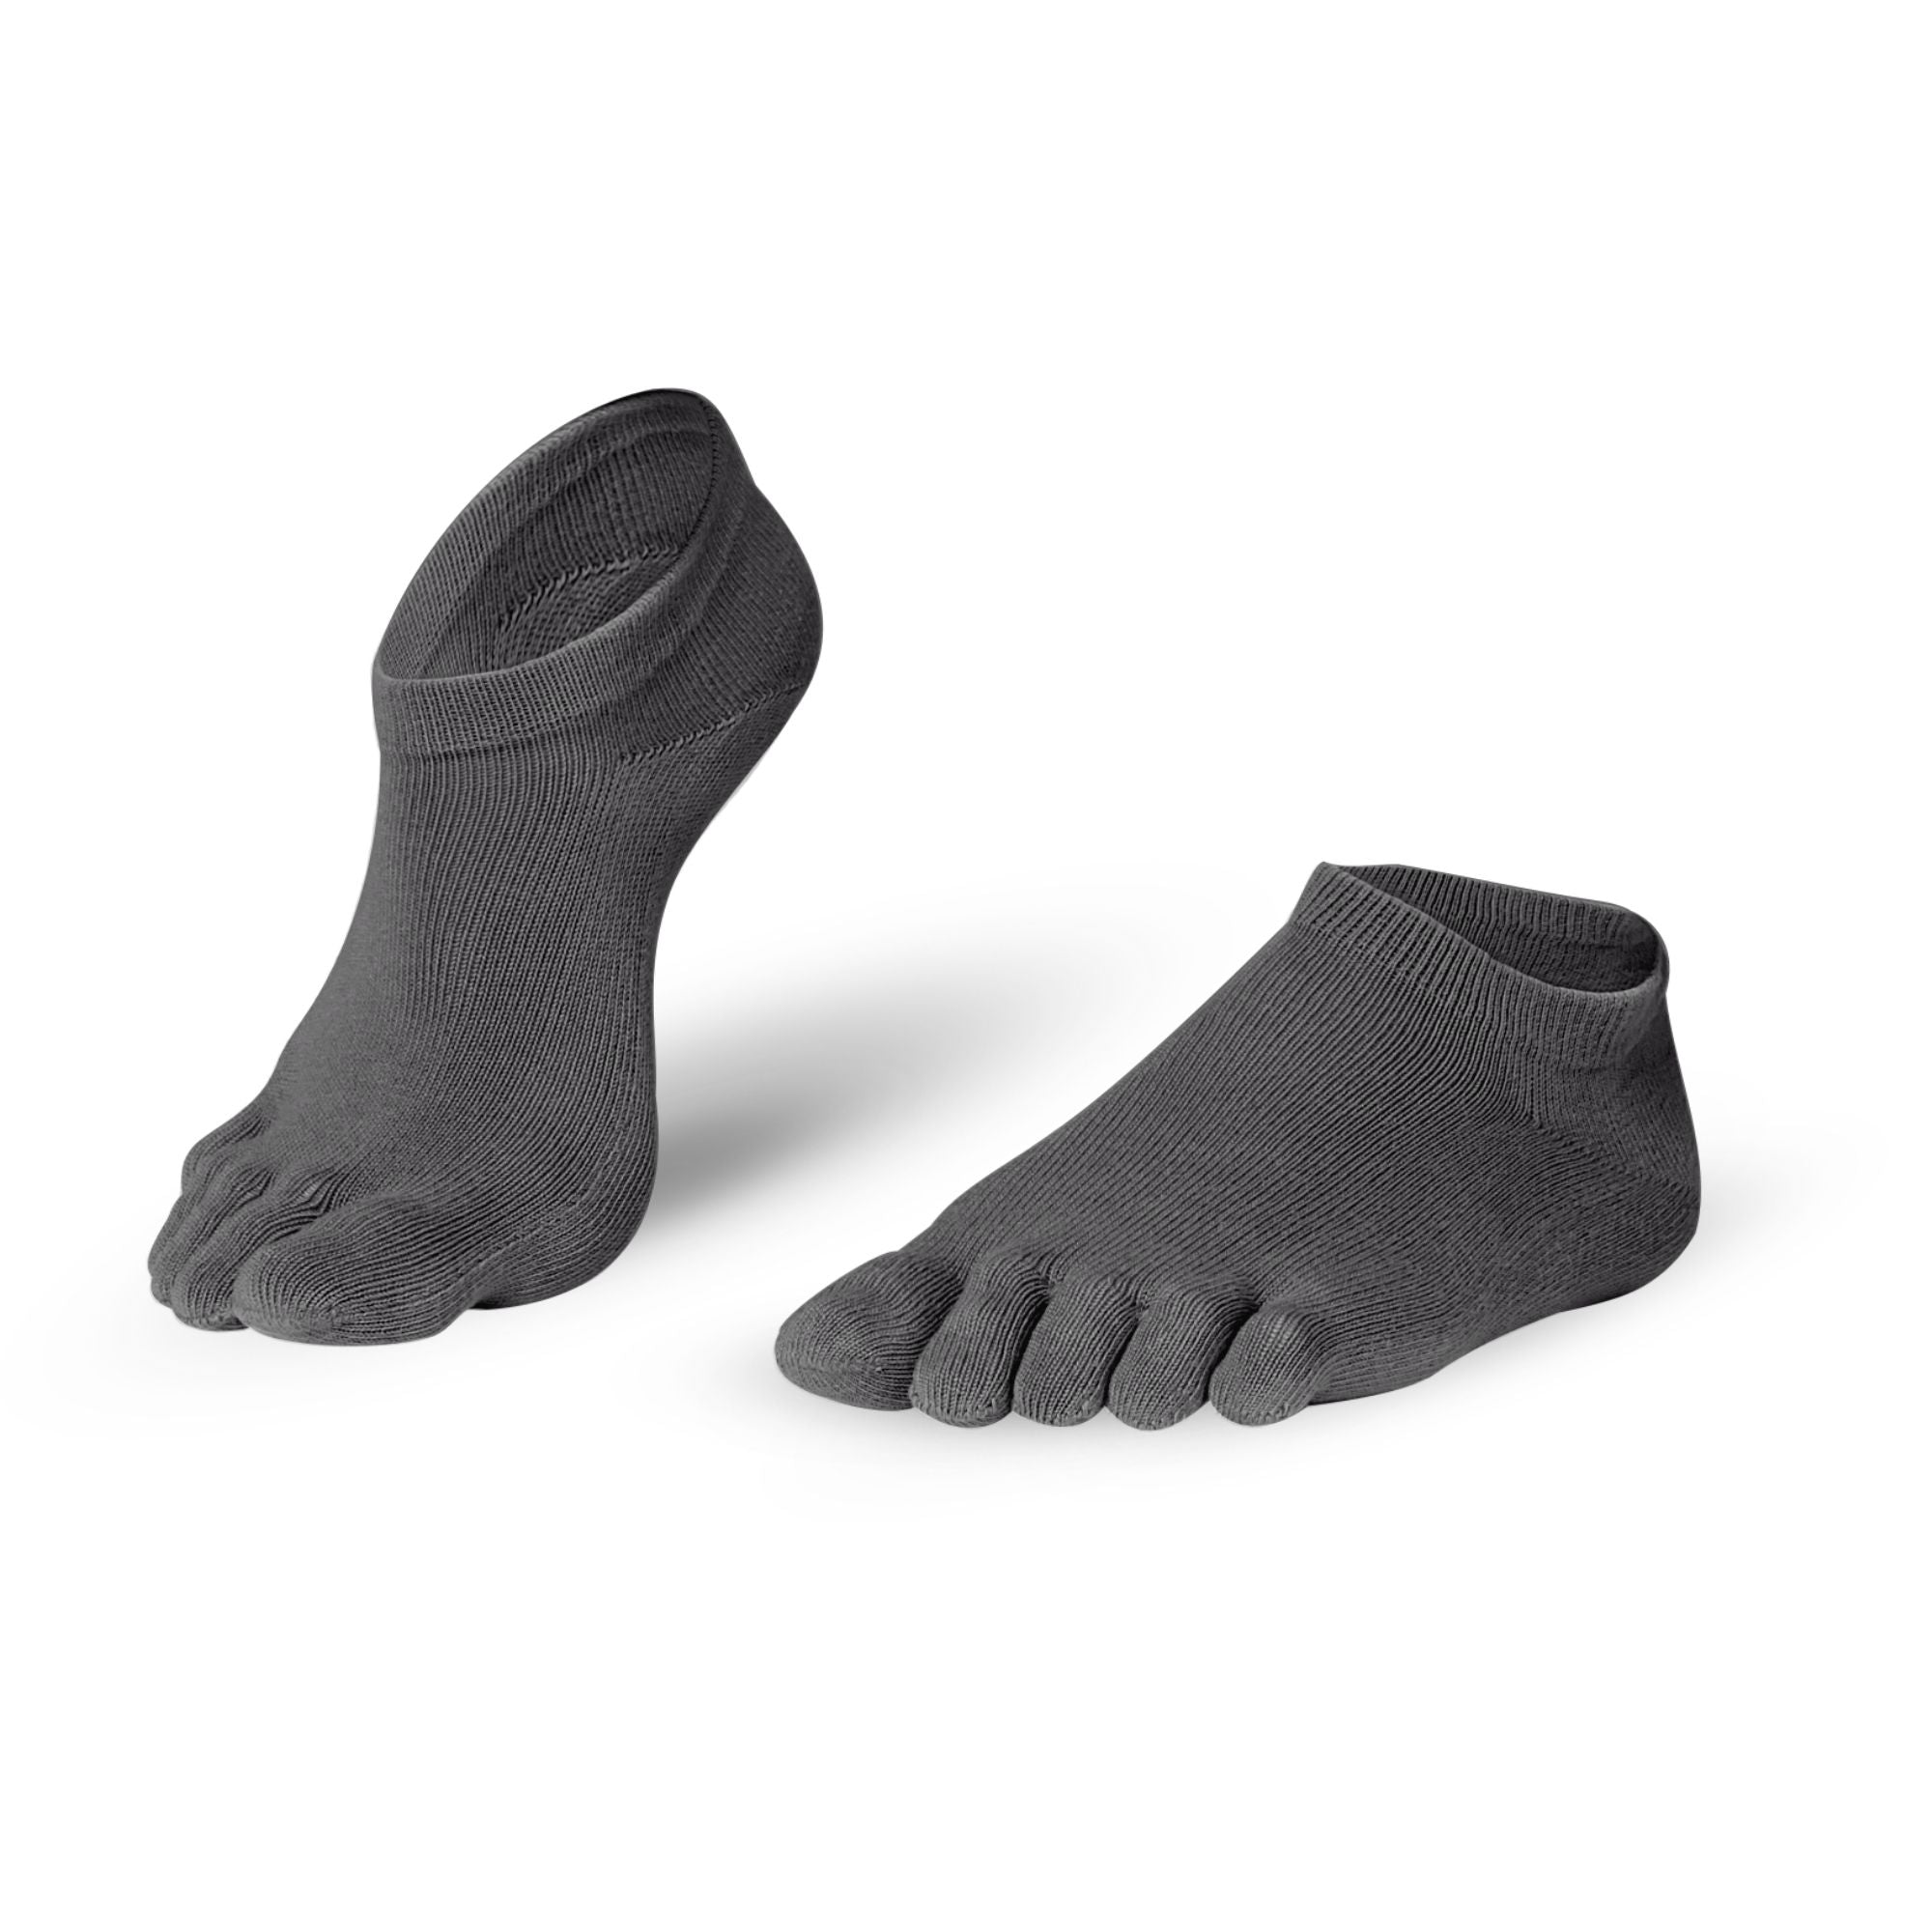 Knitido Essentials Sneaker Black - Calzado Barefoot